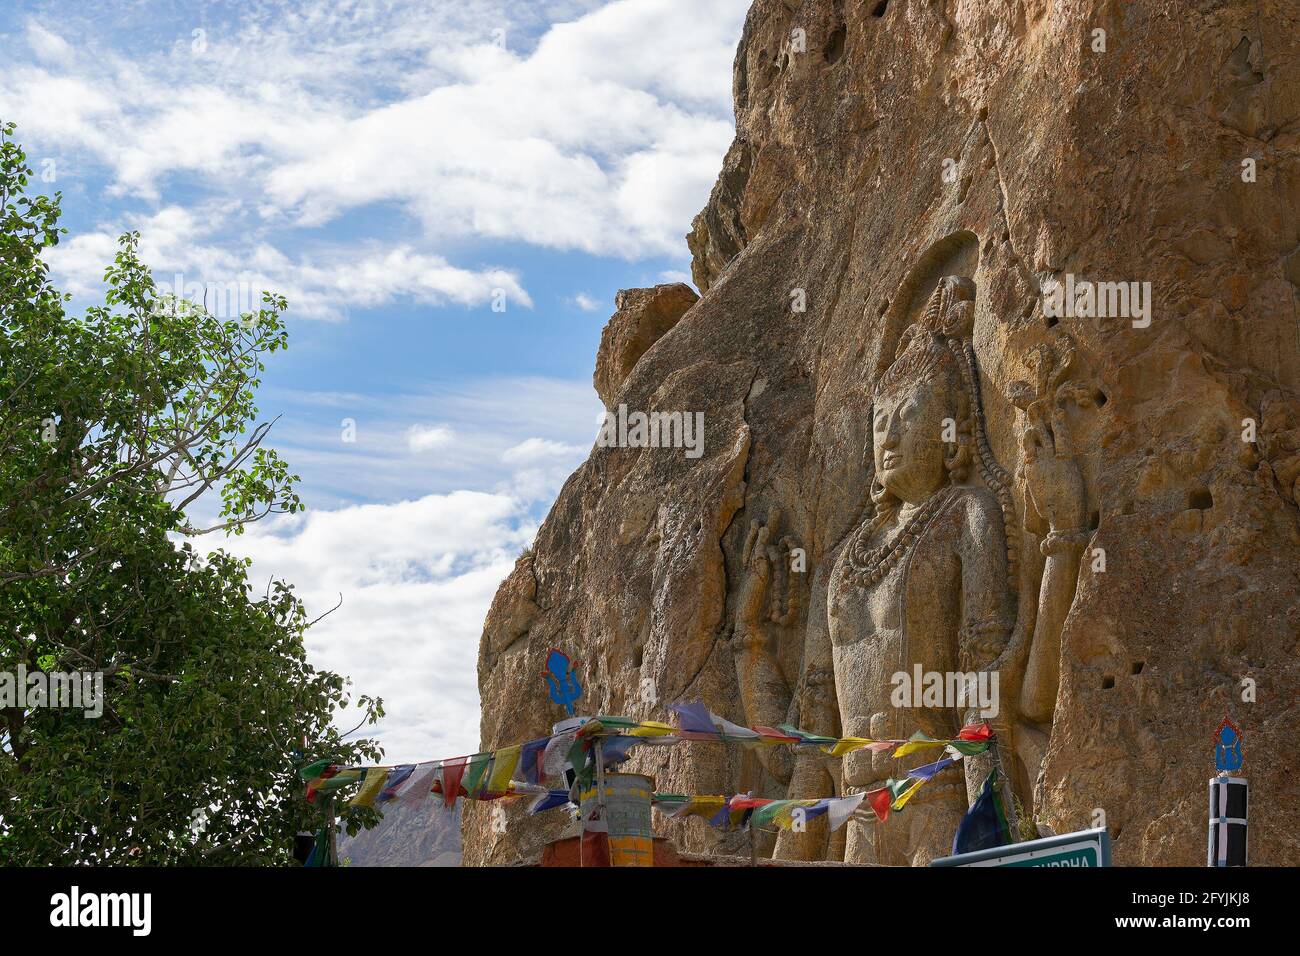 Mulbekh, Ladakh, Jammu e Kashmir, India - 2 settembre 2014 - il tempio buddista di Maitreya Buddha , chiamato il 'futuro Buddha'. Foto Stock